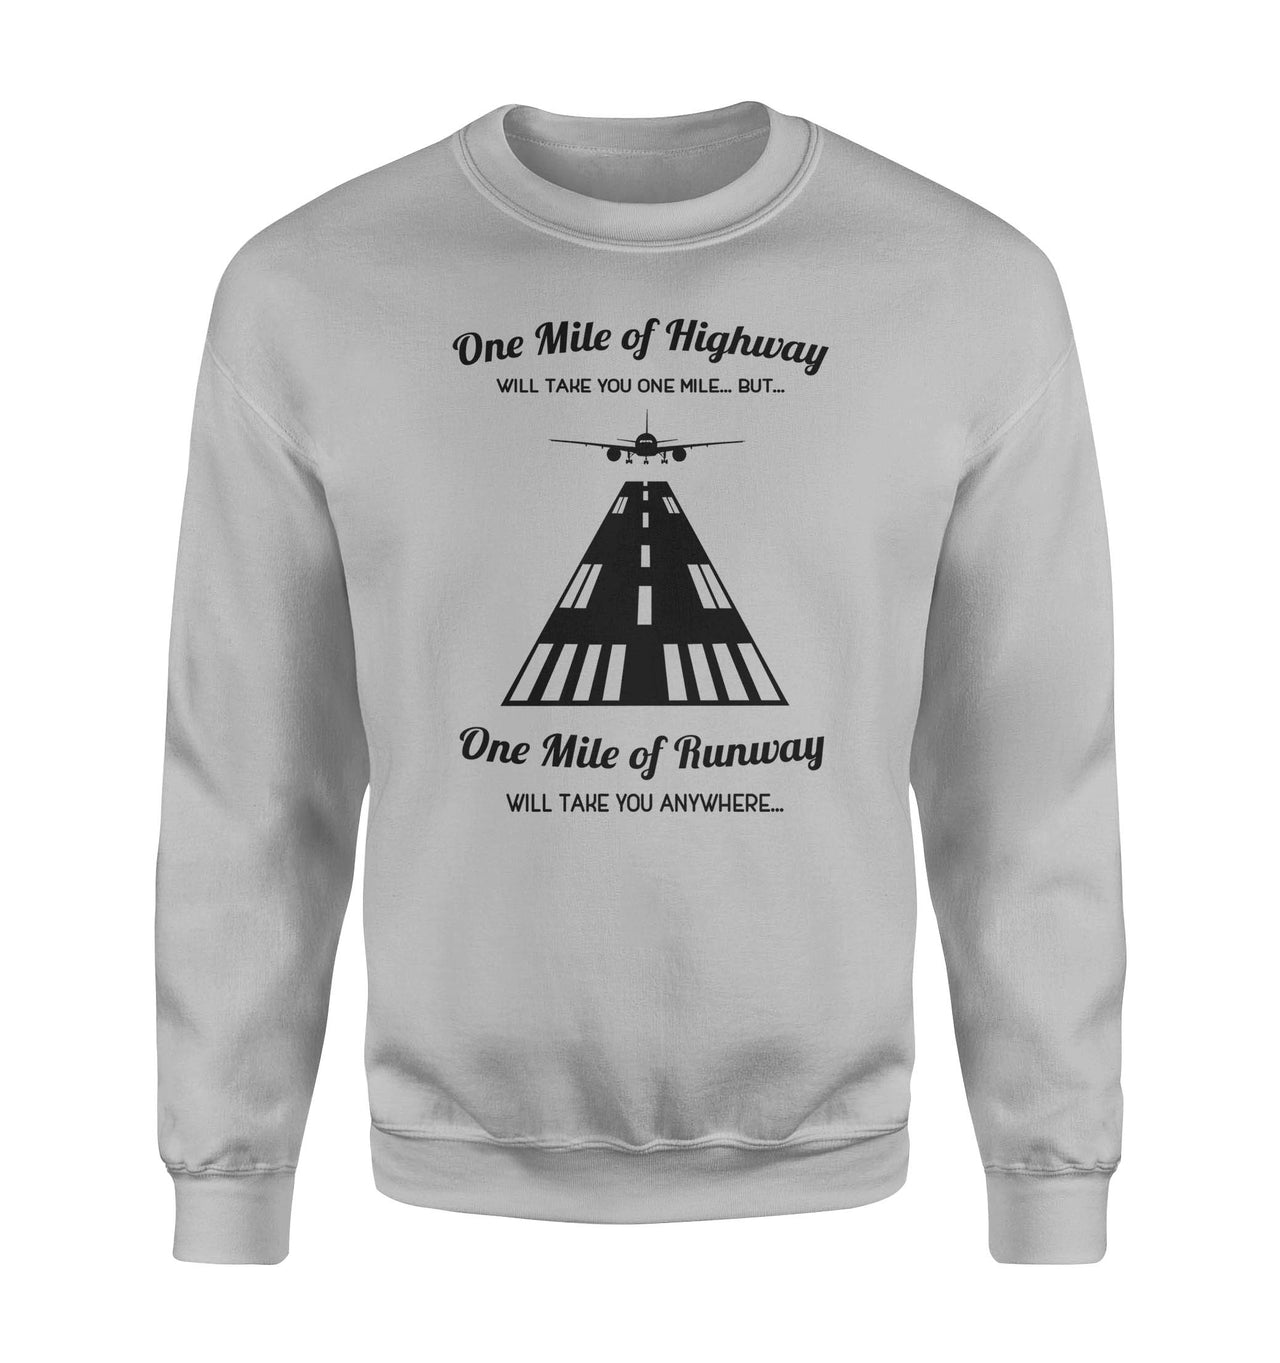 One Mile of Runway Will Take you Anywhere Designed Sweatshirts